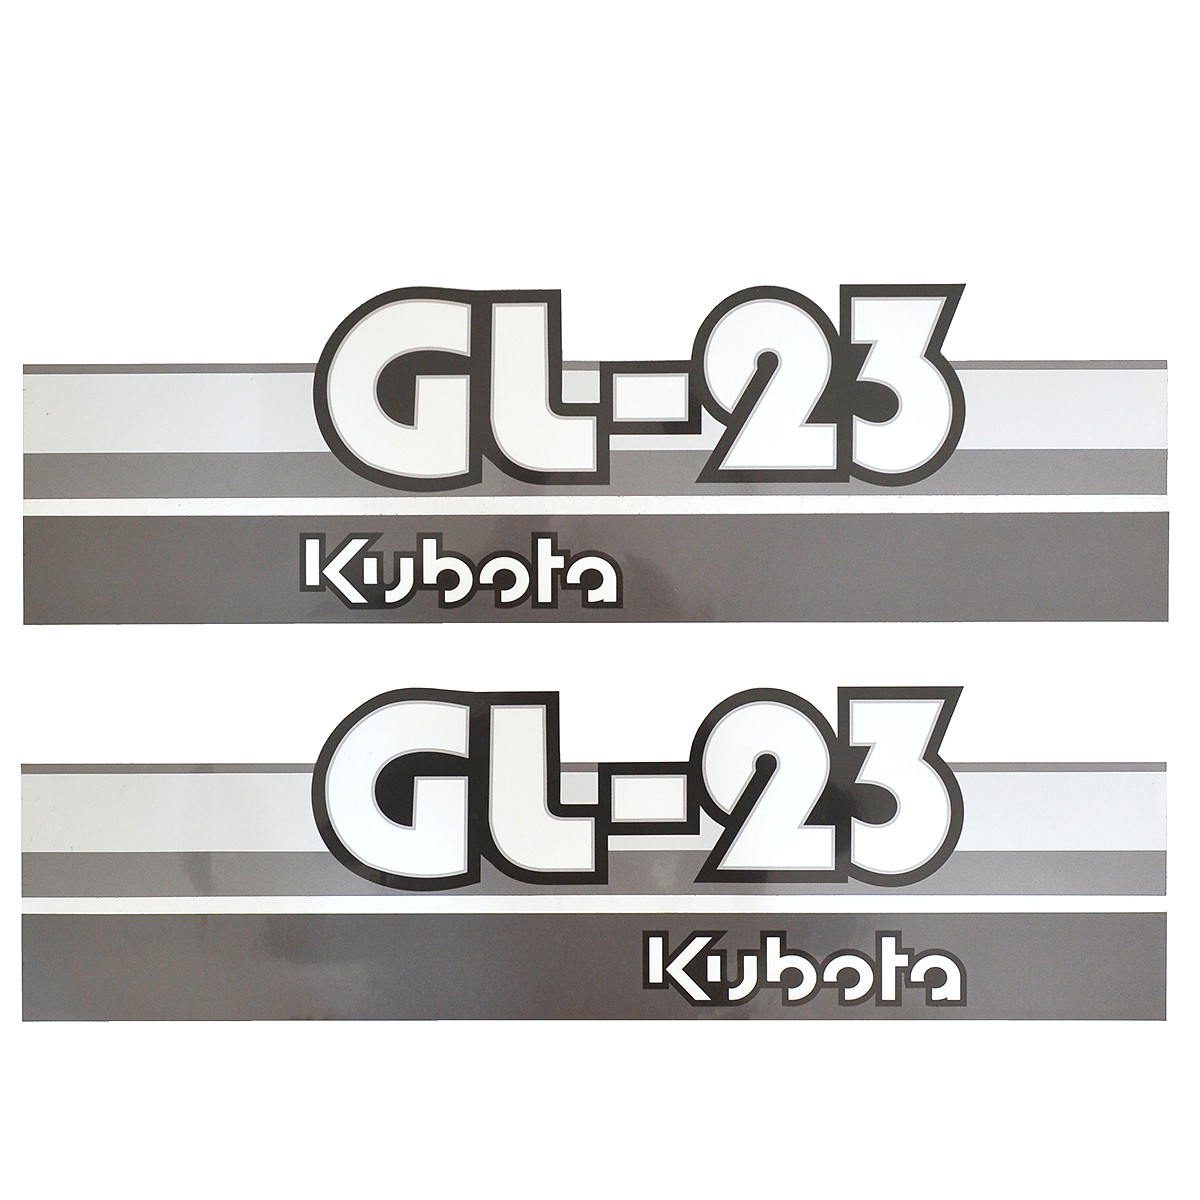 Kubota GL23 stickers